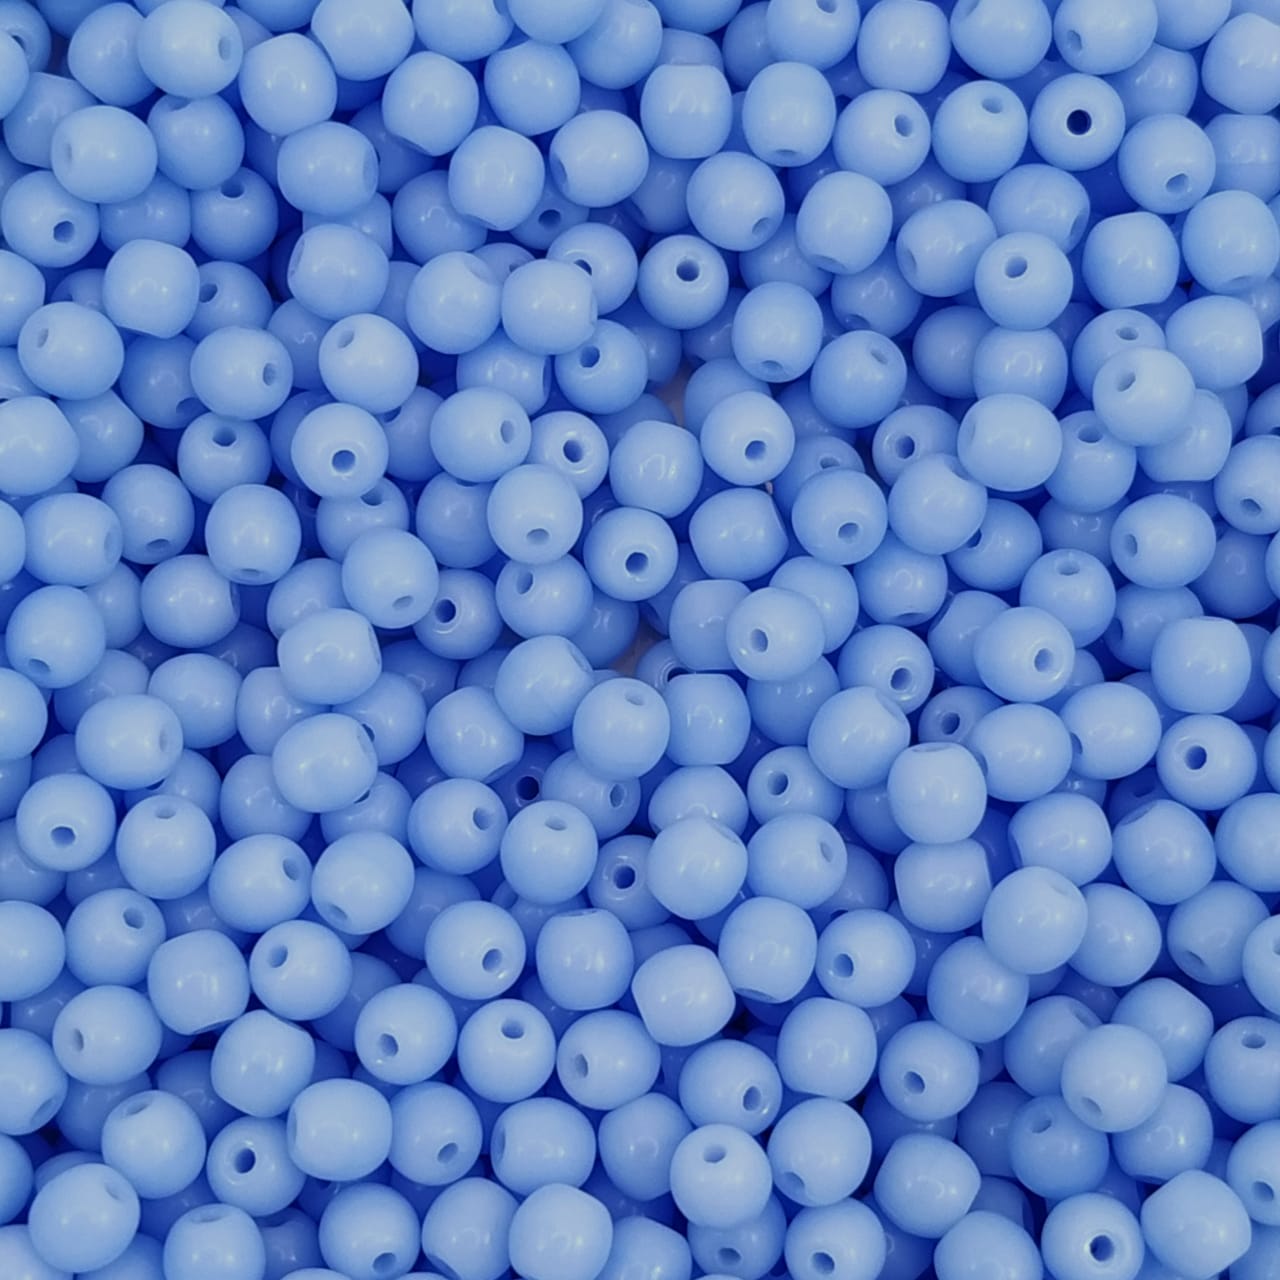 CV024 - Conta de Porcelana Preciosa Azul Hortencia 4mm - 100Unids